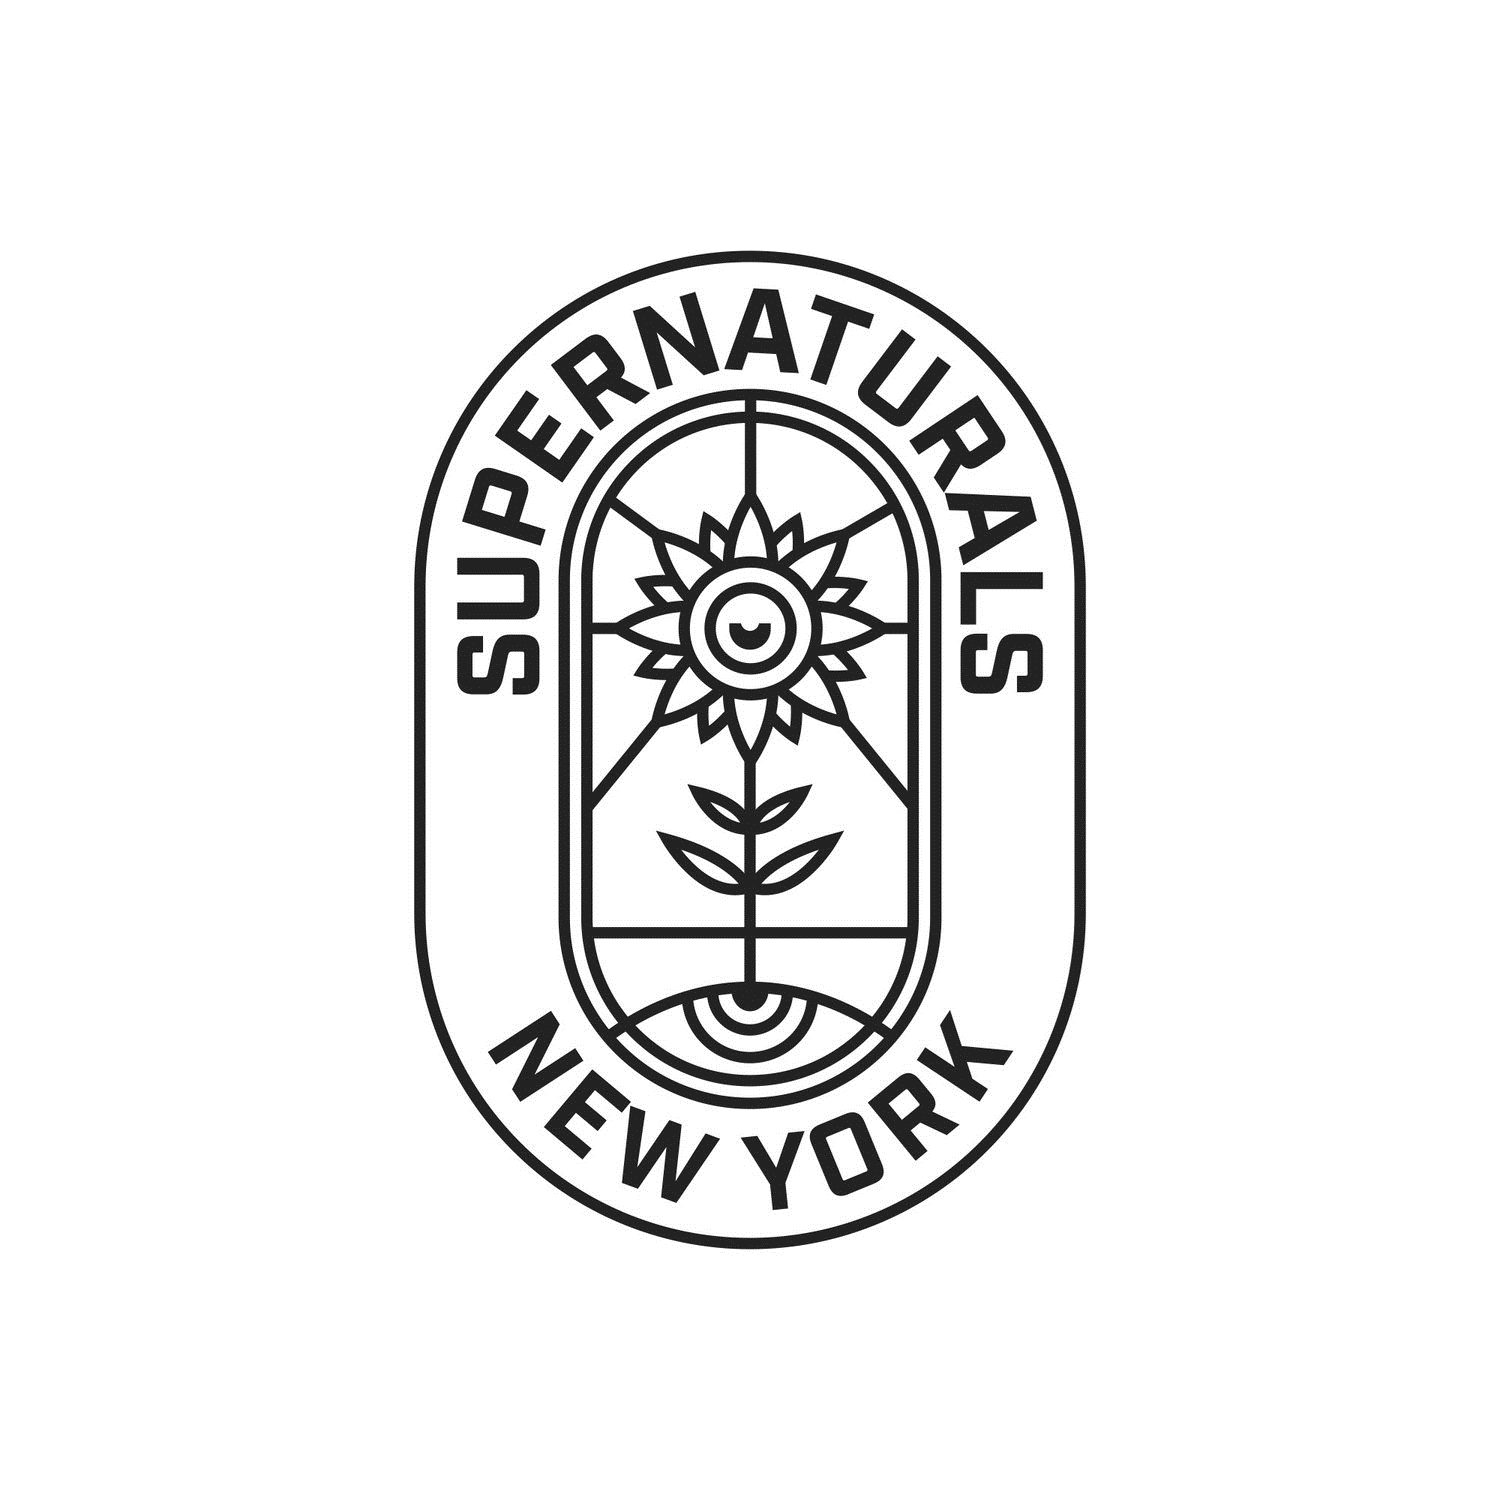 Supernaturals New York Cannabis Brand Logo